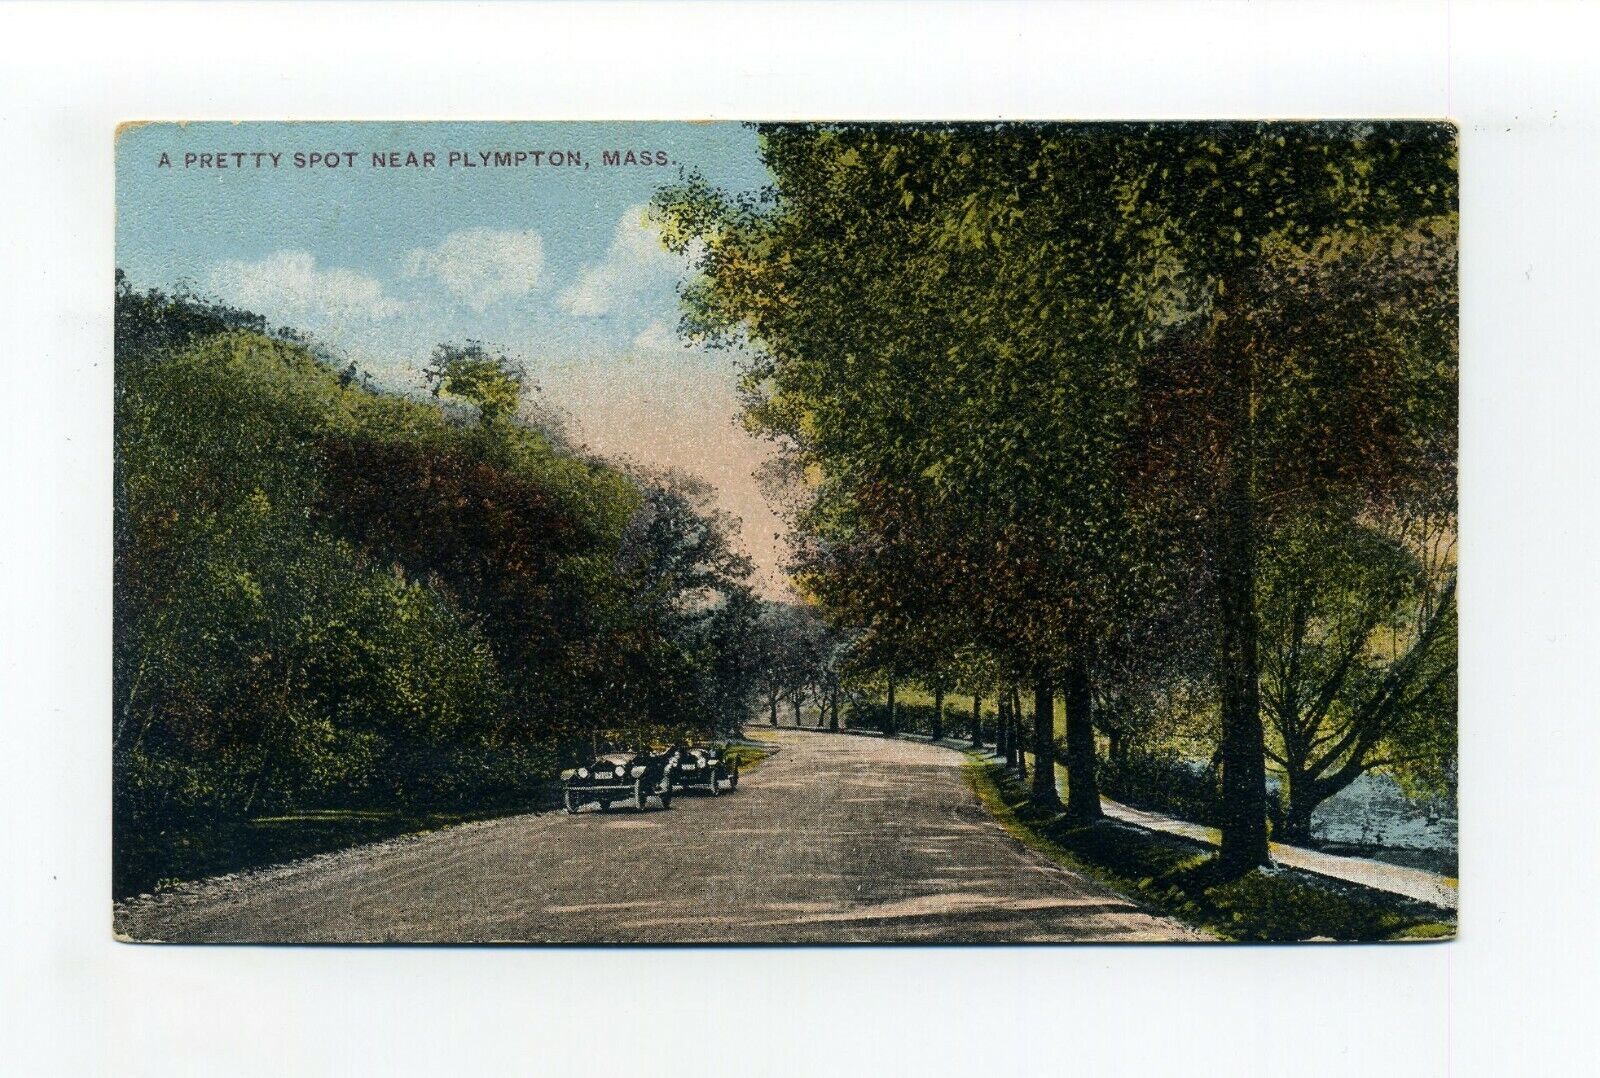 Plympton MA Mass antique postcard, 1917, 2 old cars on dirt road, Pretty Spot